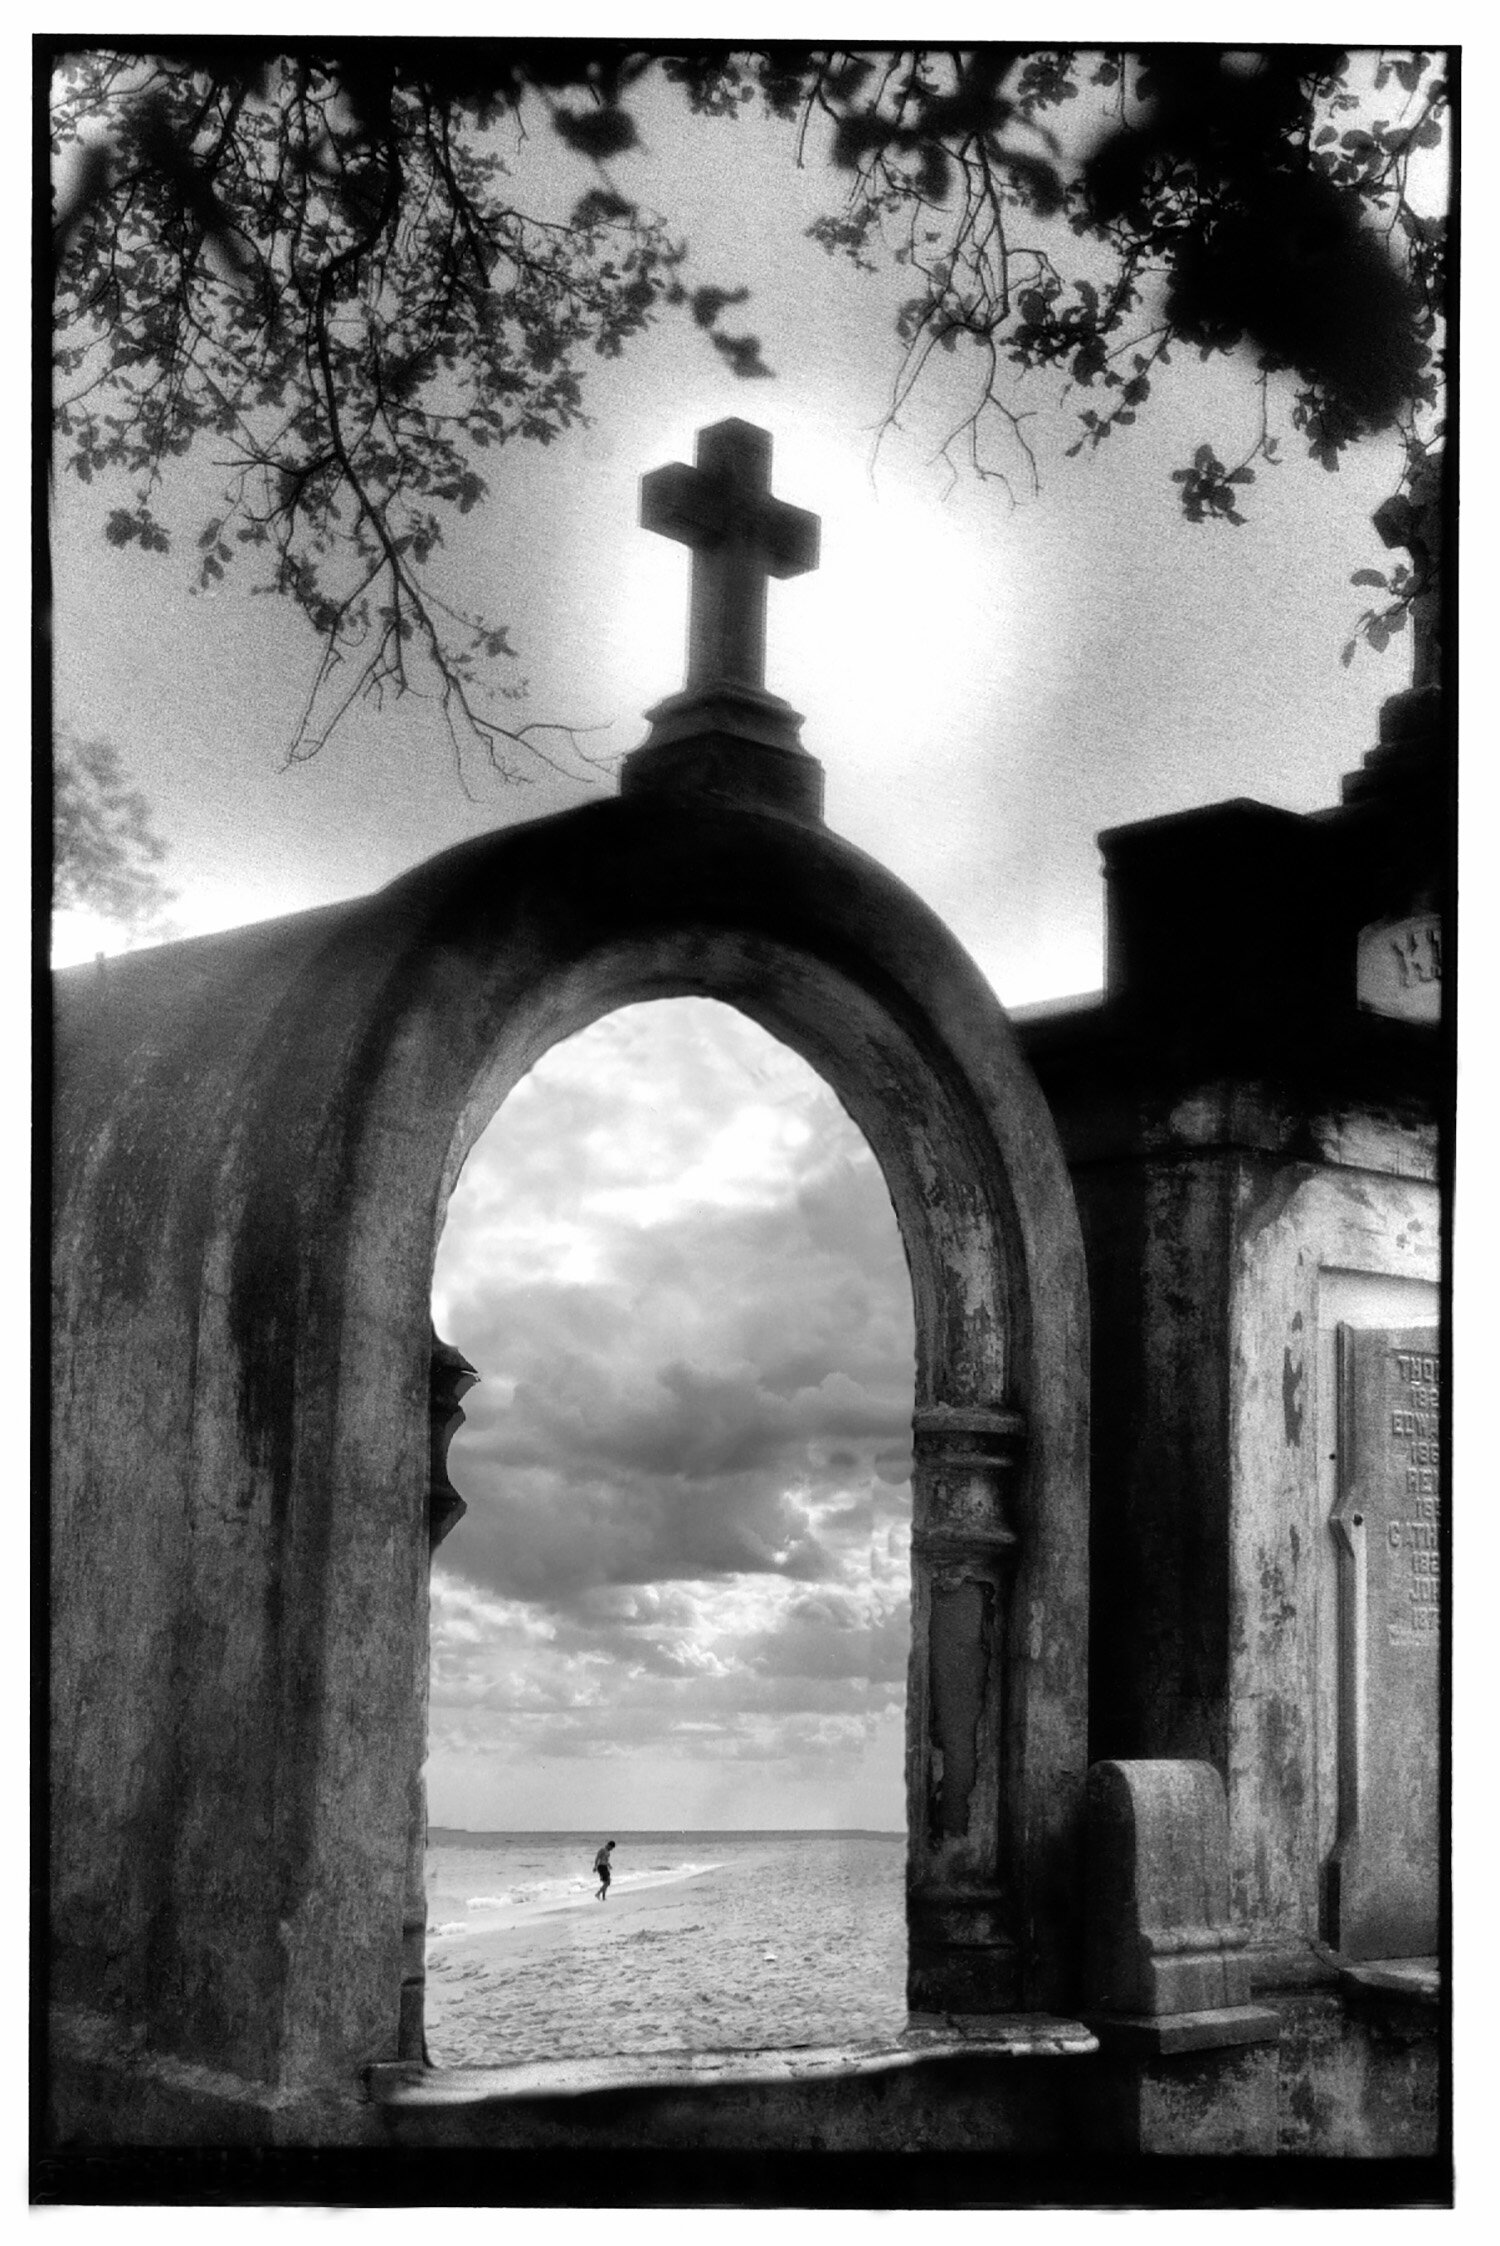  Metairie Cemetery, New Orleans, LA 